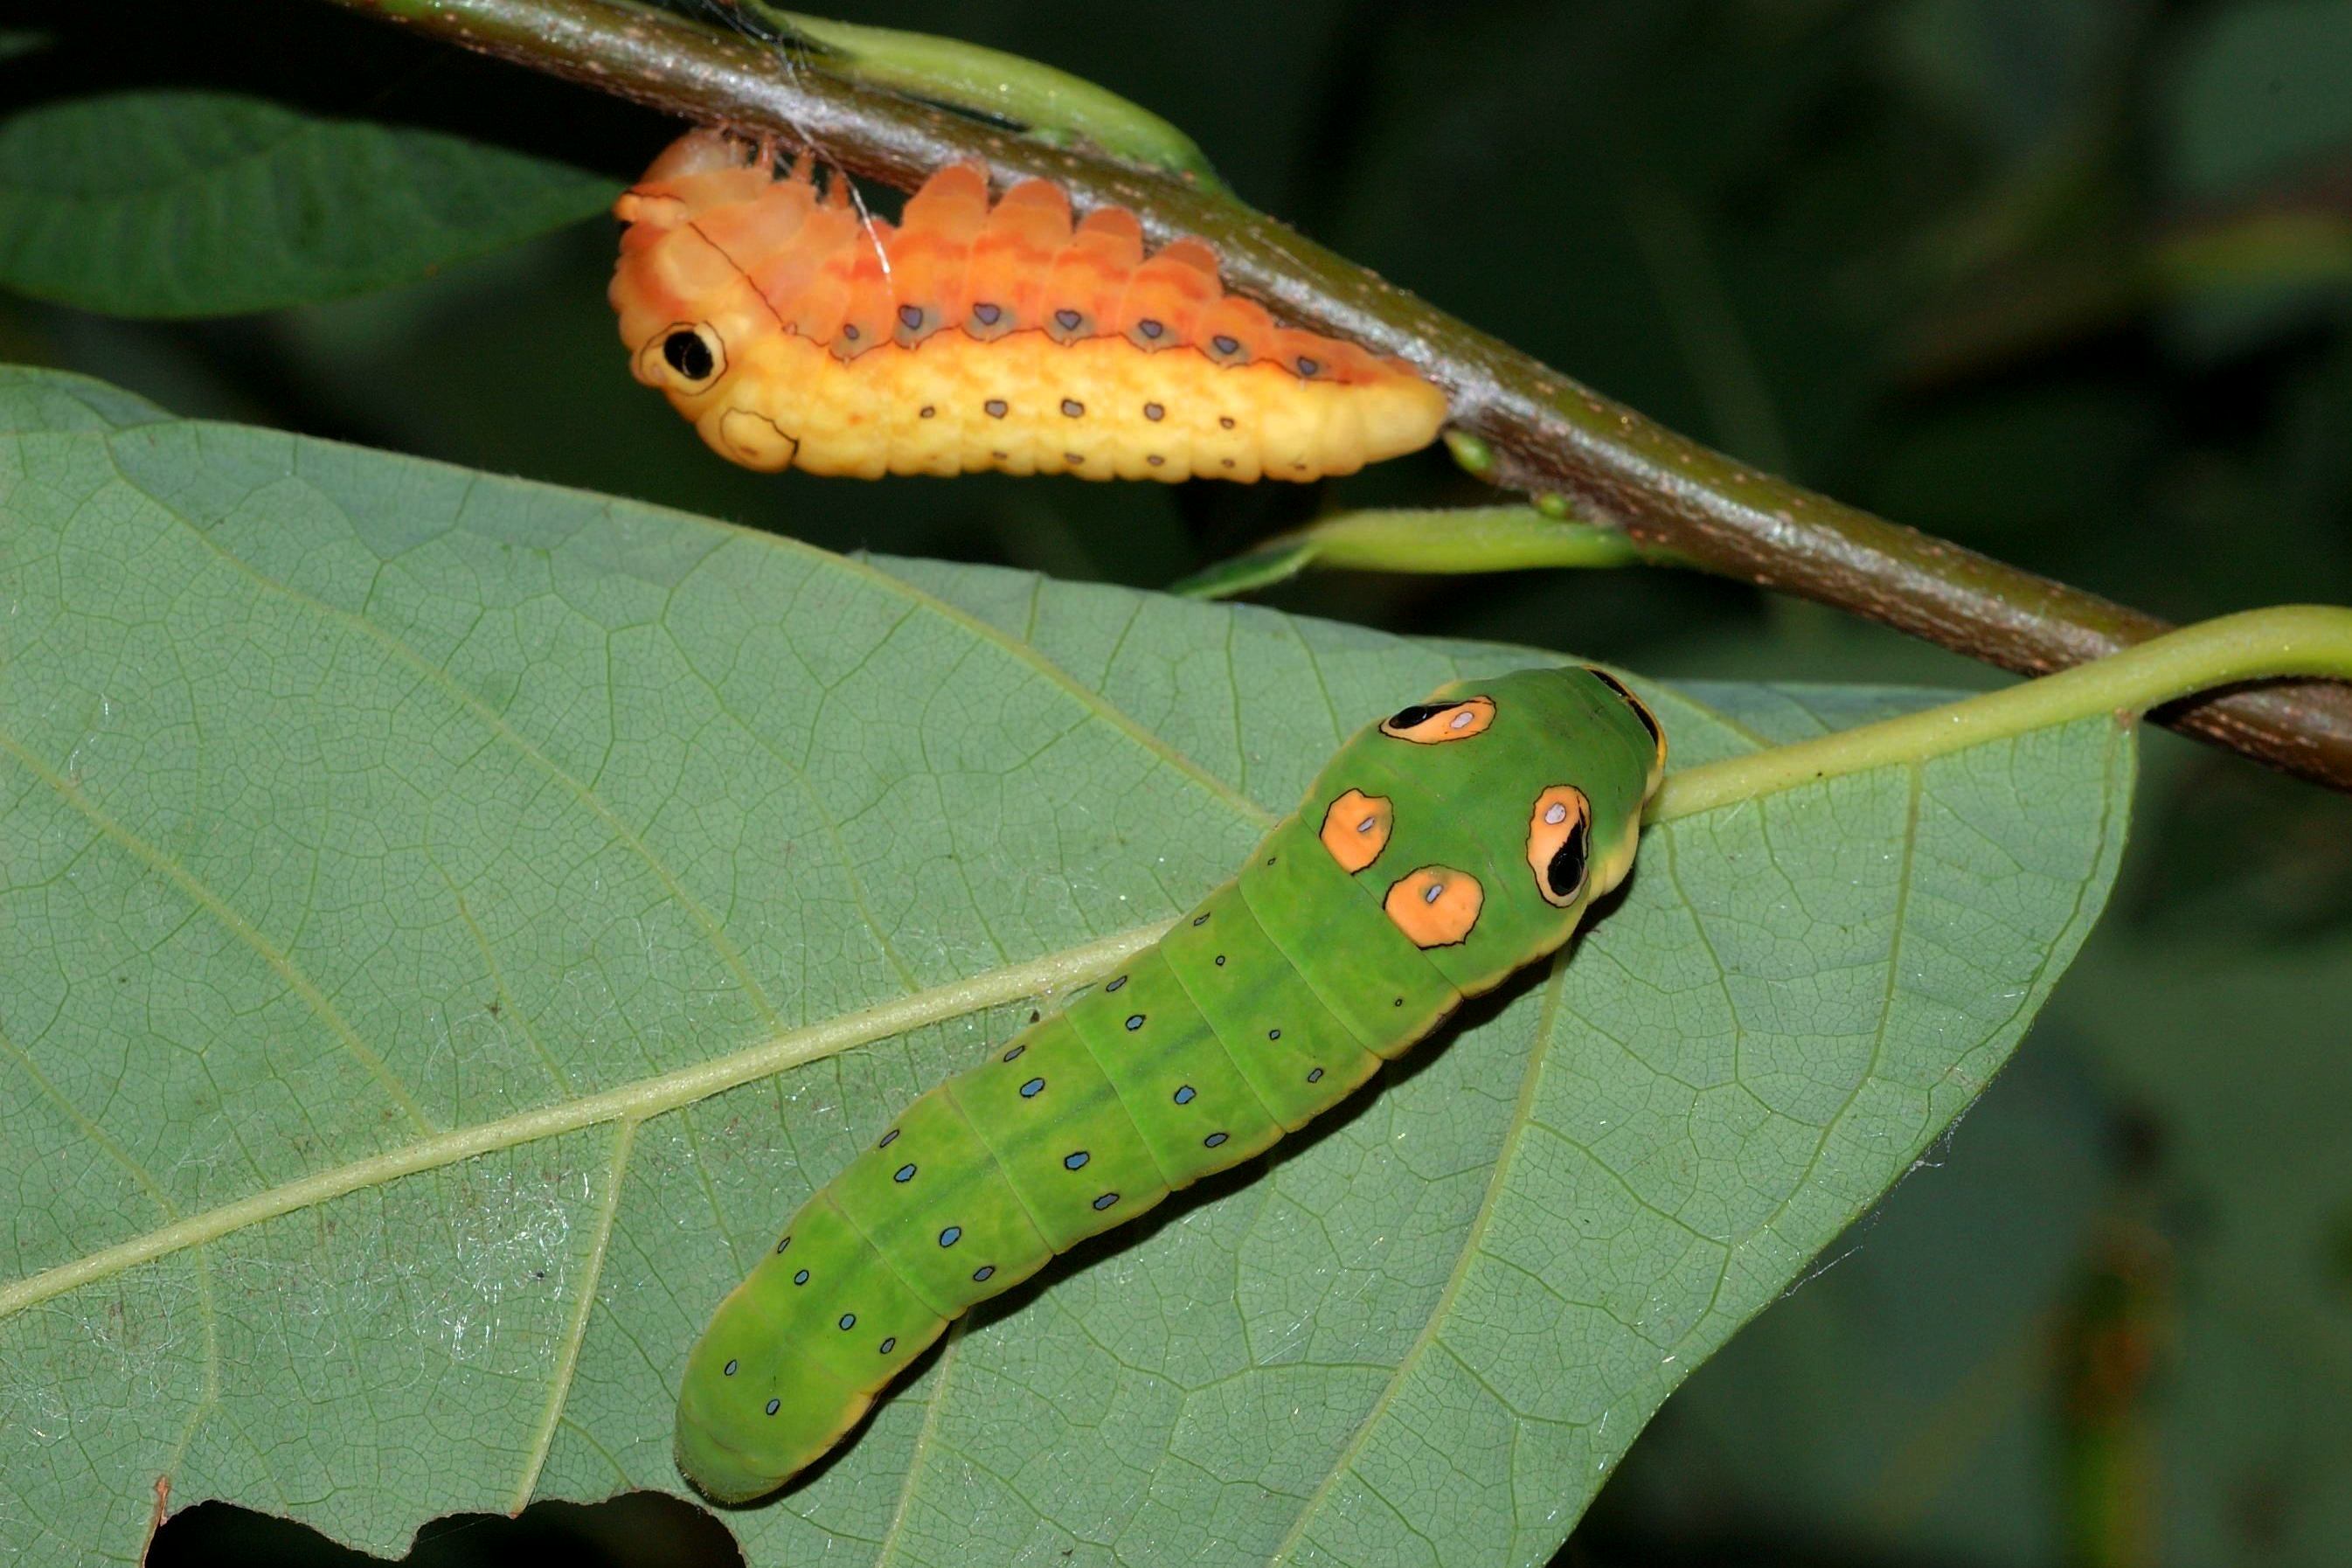 Spicebush caterpillars